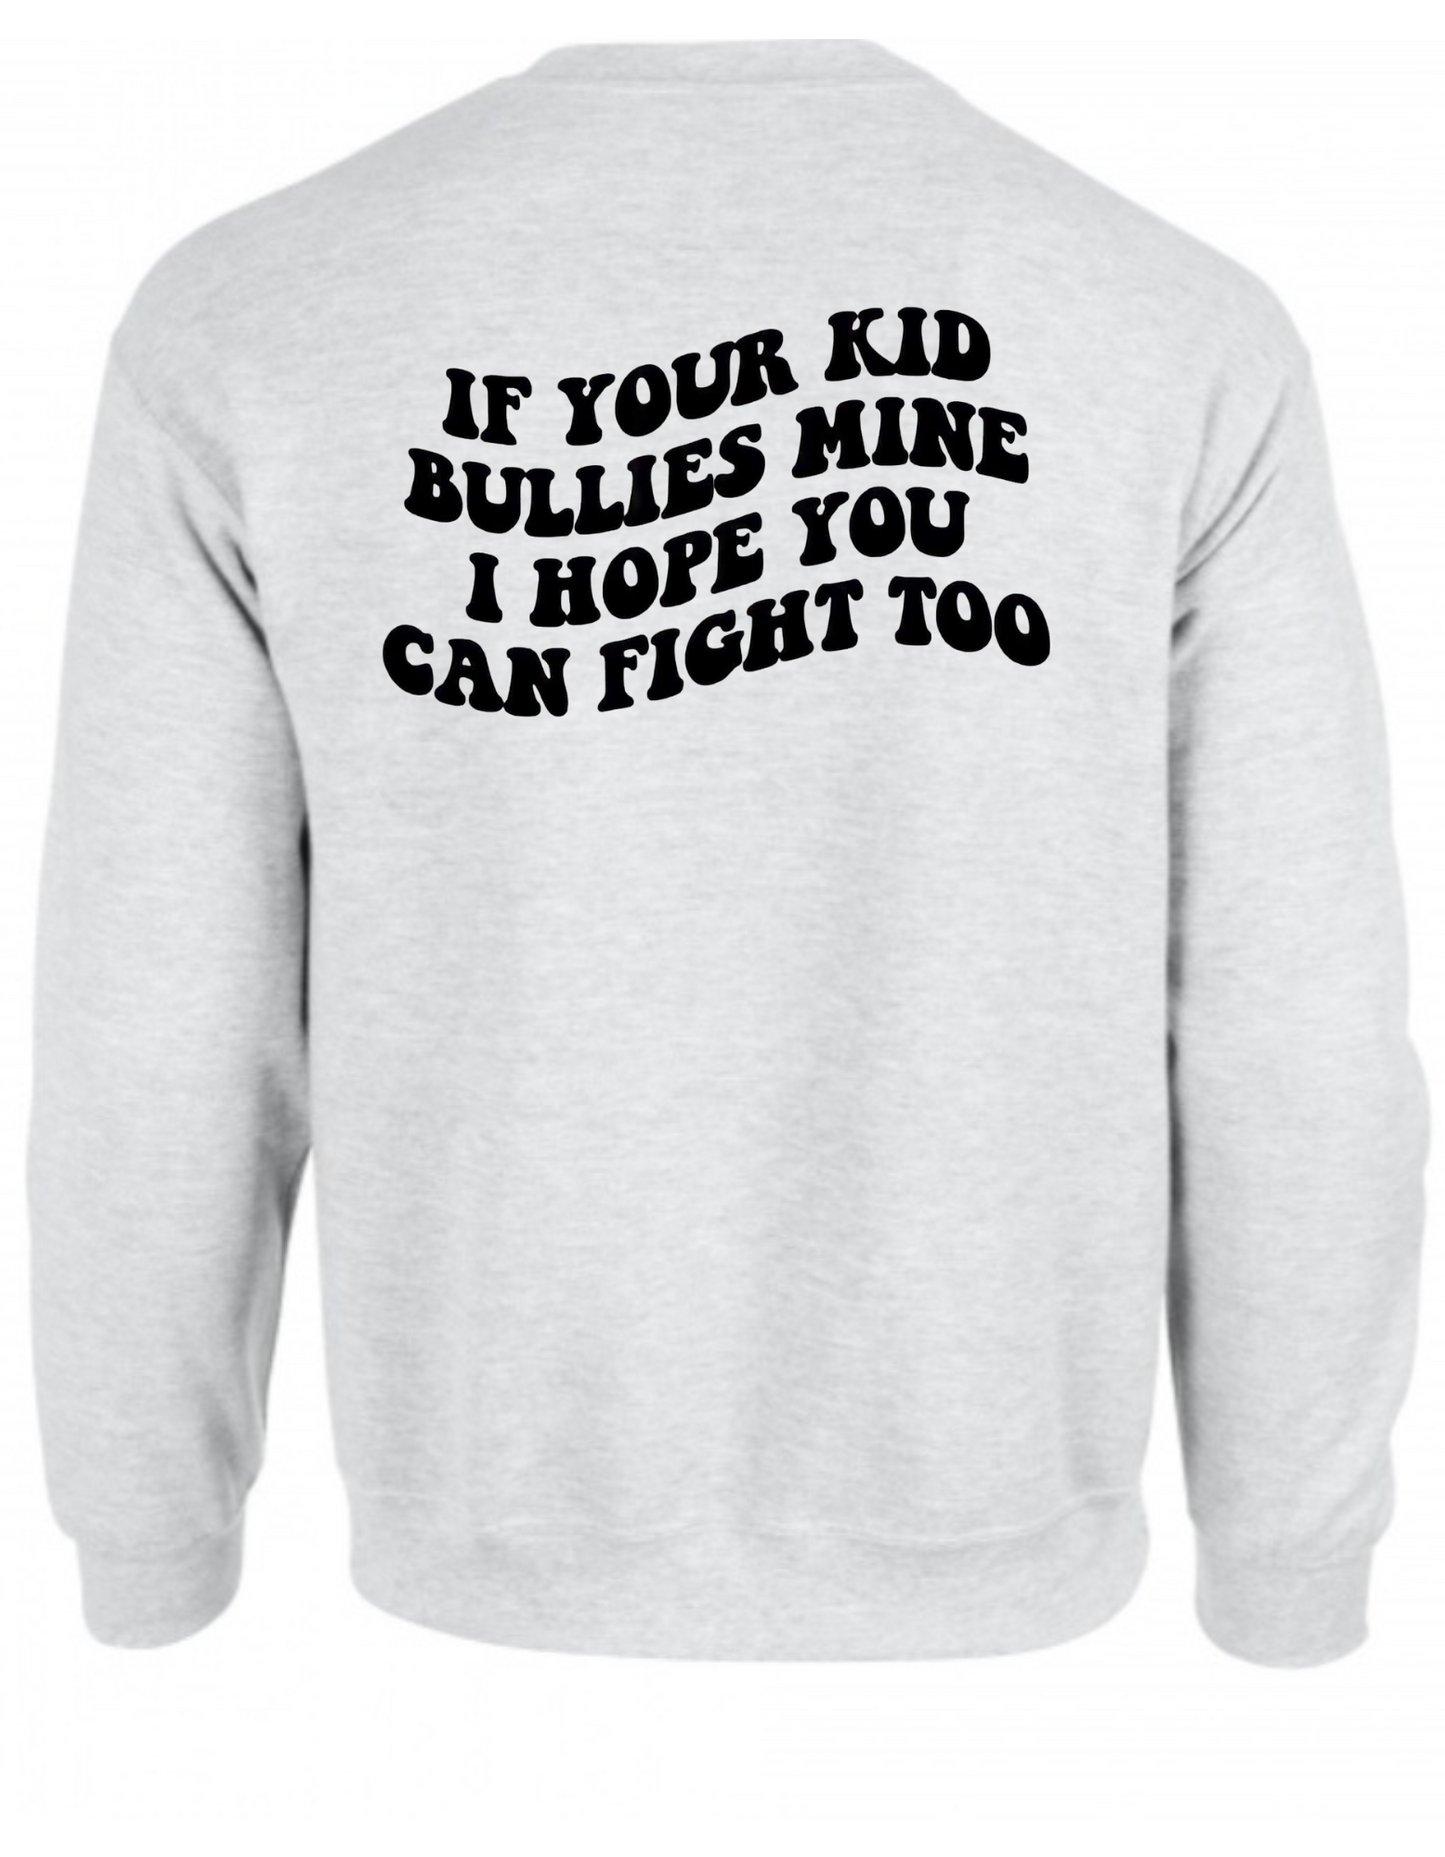 If your kid bullies mine